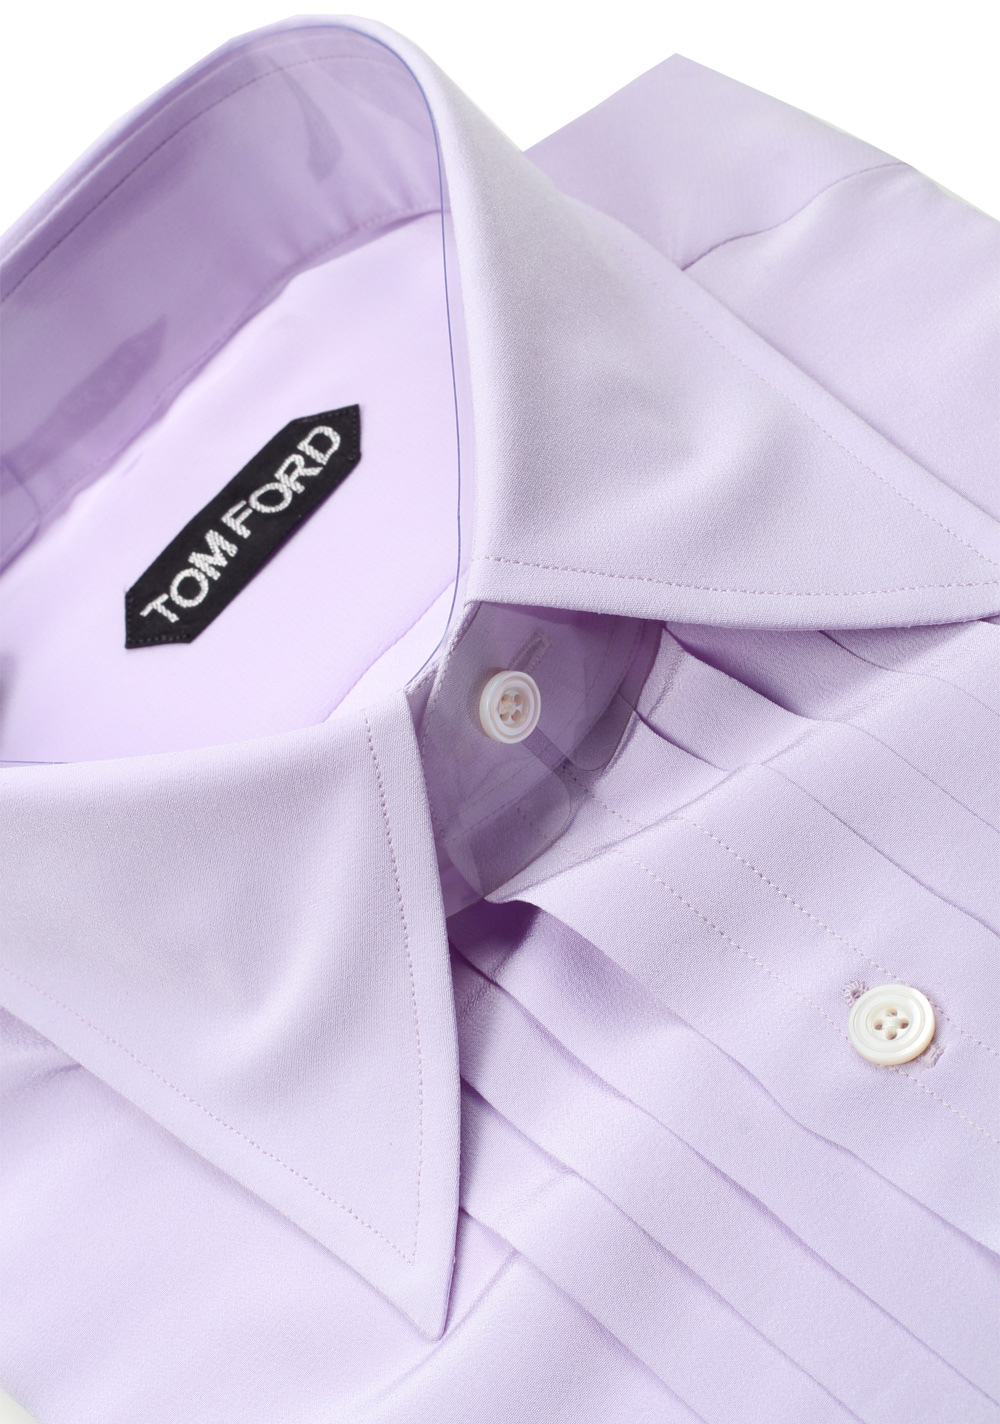 Tom Ford Checked Gray High Collar Dress Shirt Size 40/15,75 U.S. CL